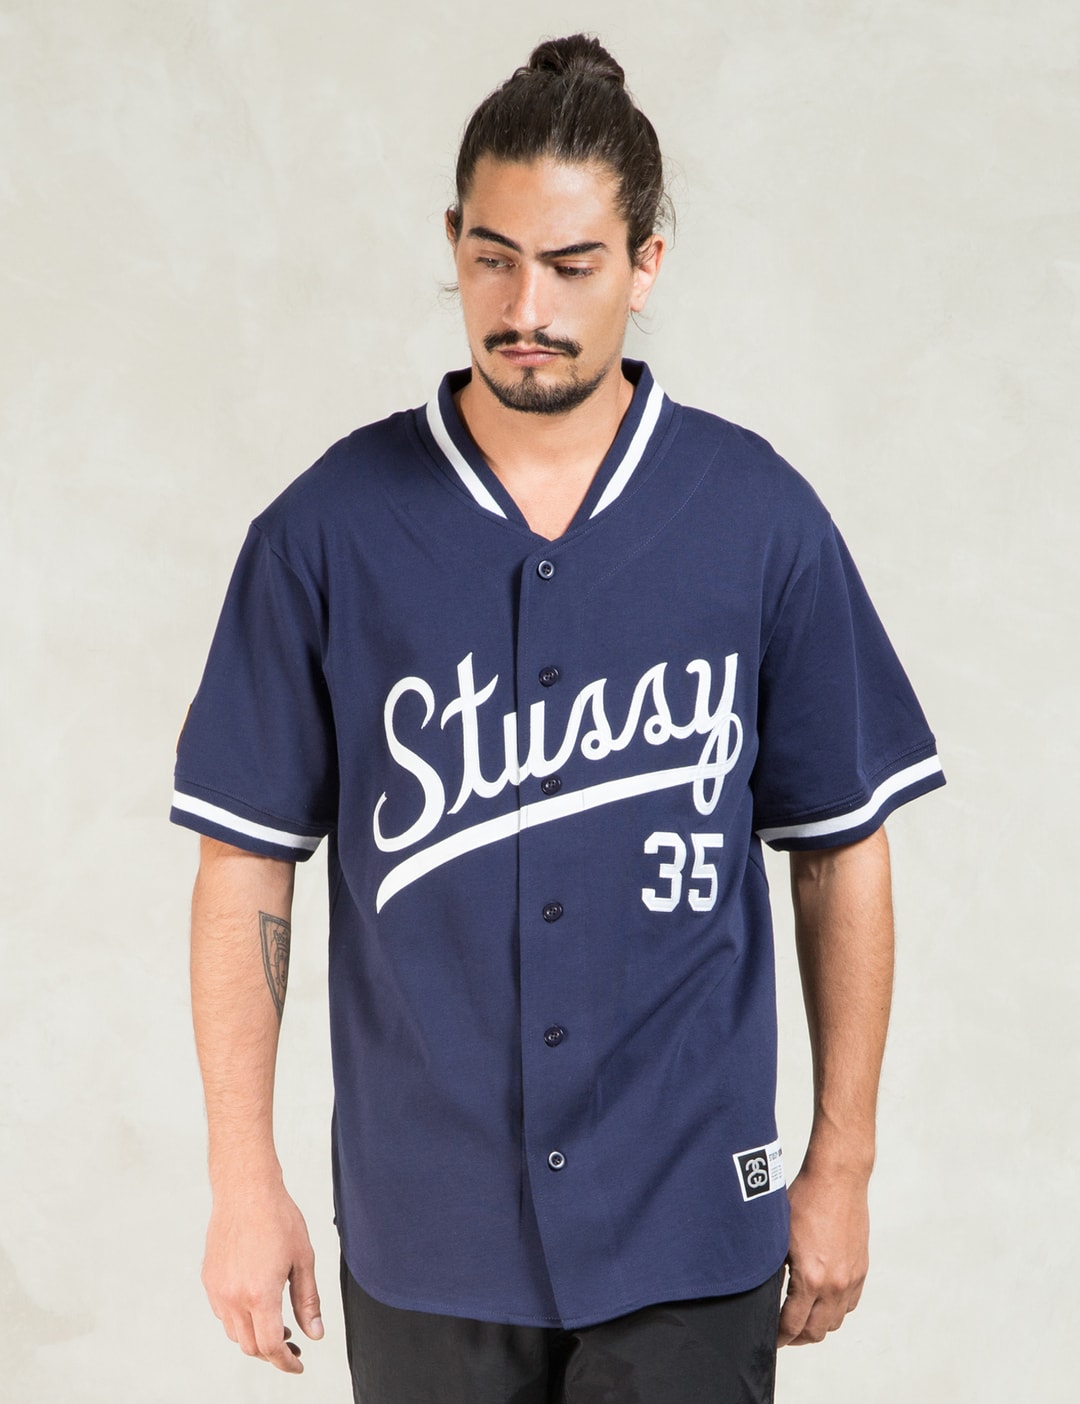 Stüssy - Navy Script Baseball Jersey | HBX - Globally Curated Fashion ...